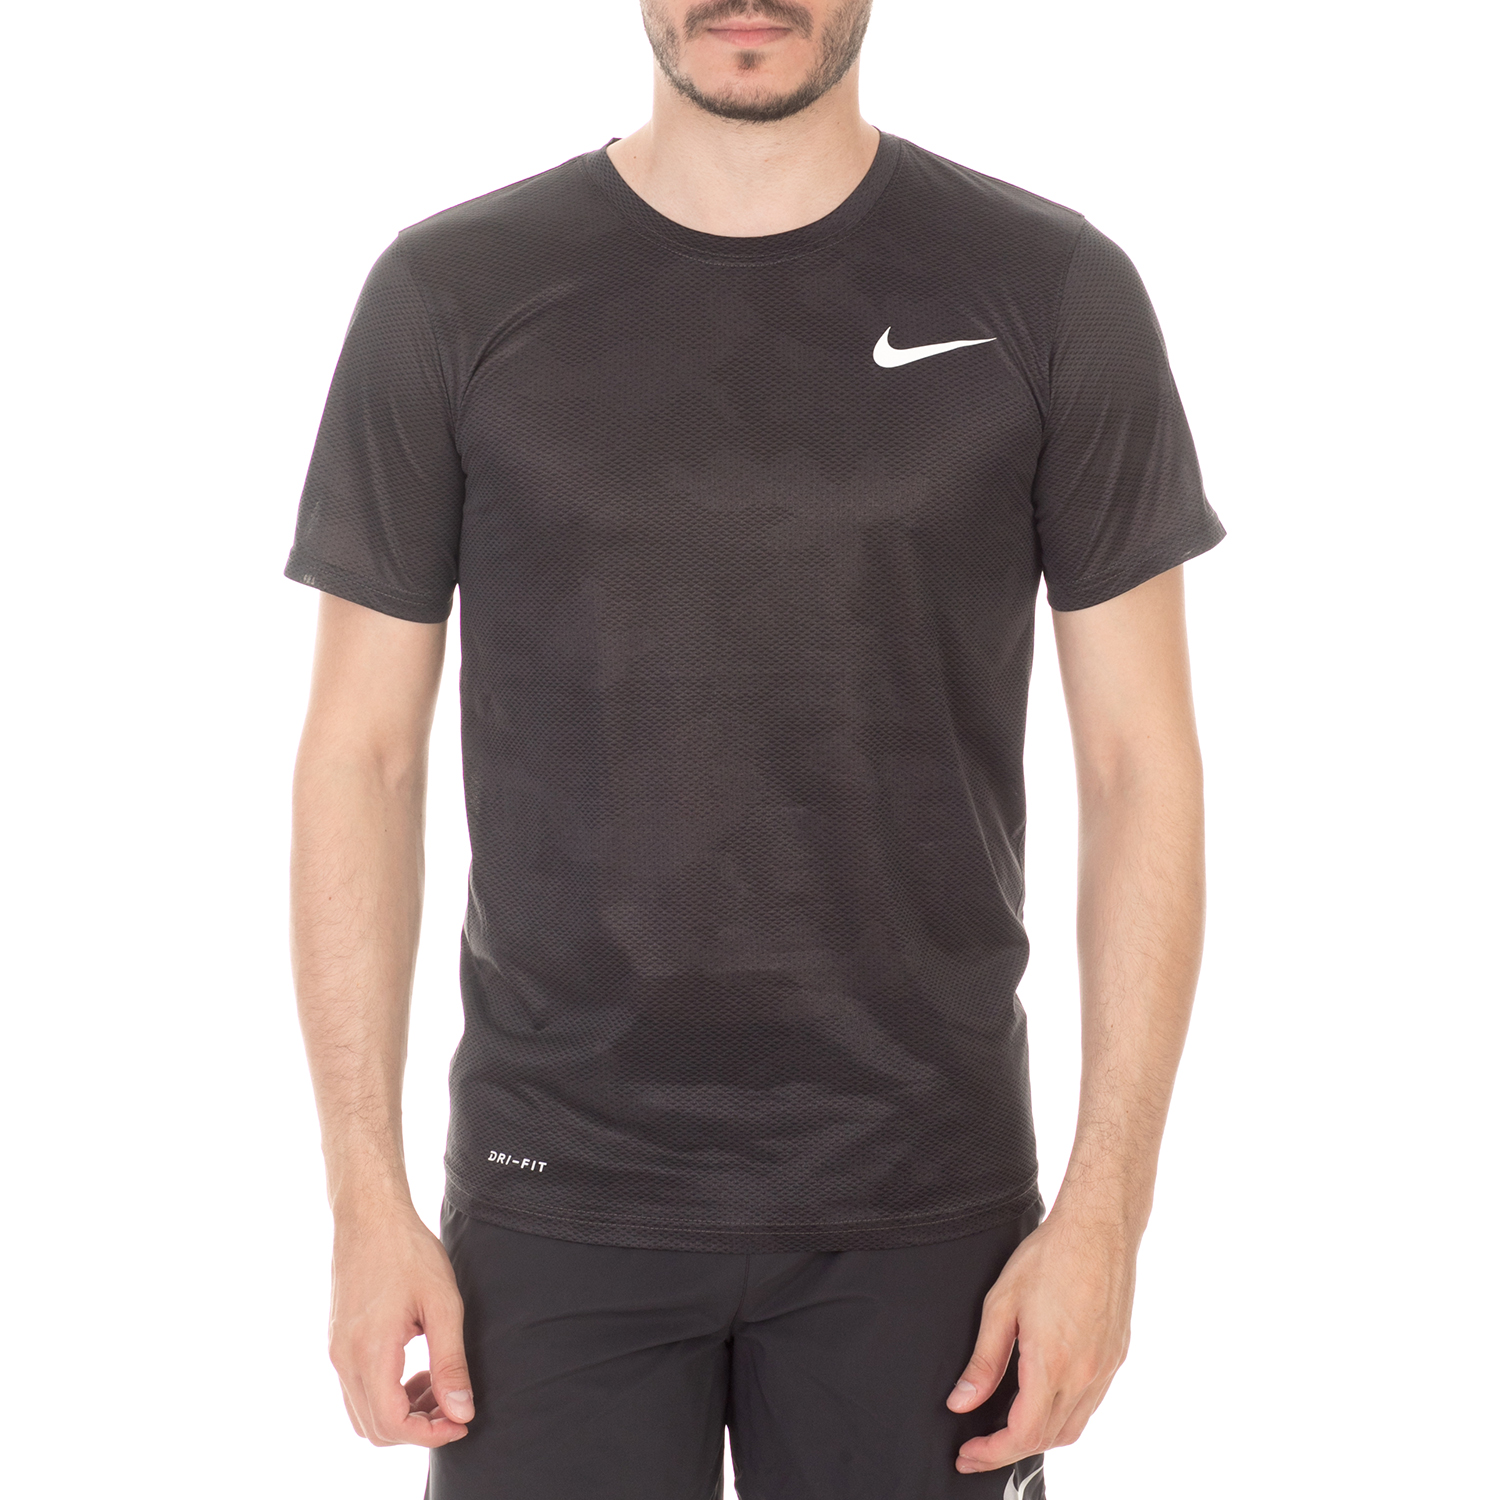 NIKE - Ανδρικό t-shirt NIKE DRY TEE LEG CAMO AOP ανθρακί Ανδρικά/Ρούχα/Αθλητικά/T-shirt